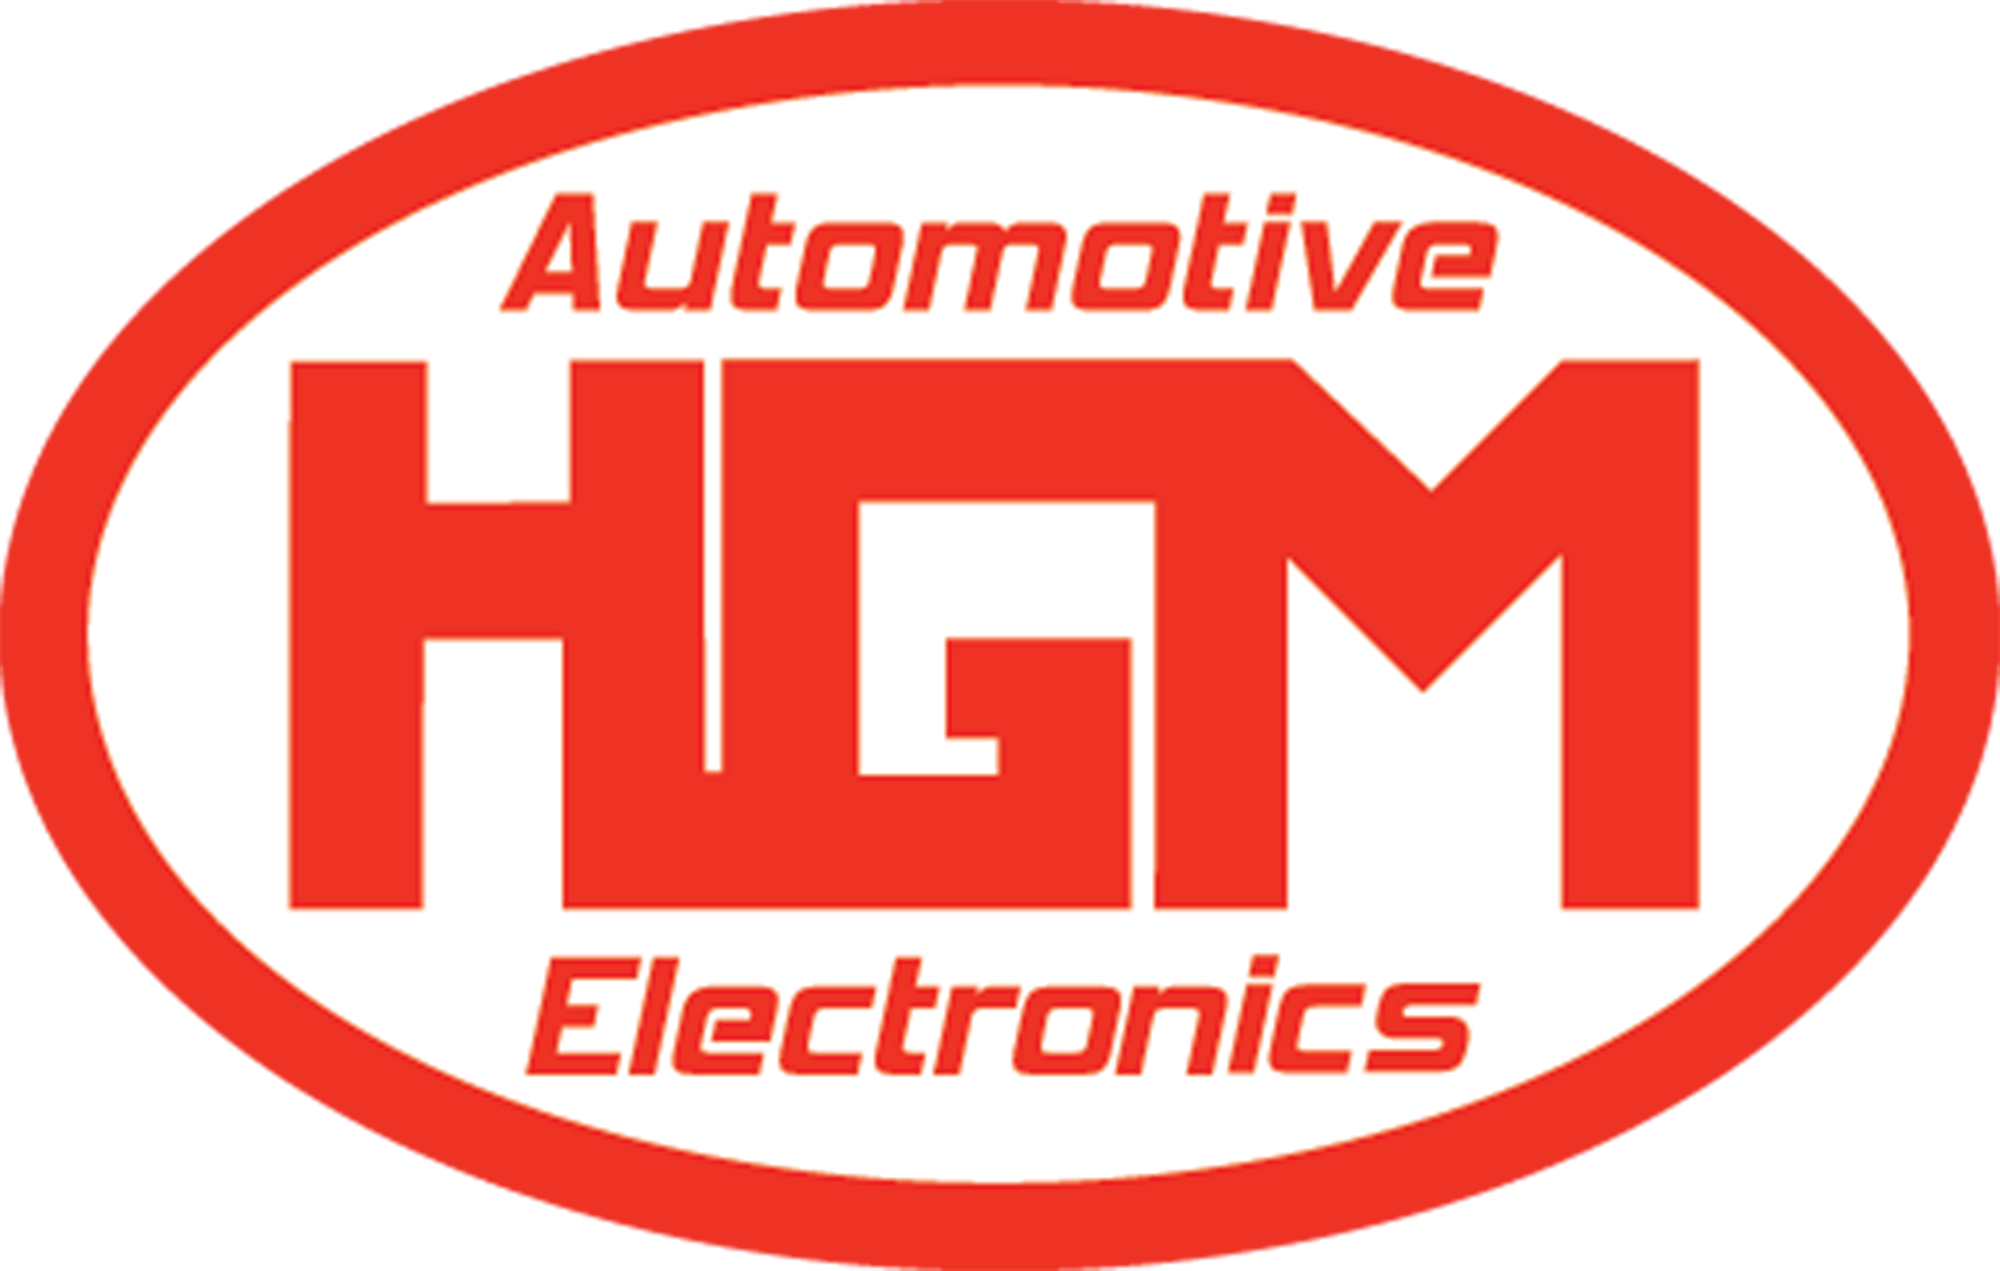 Wholesale Automatic Transmissions Logo